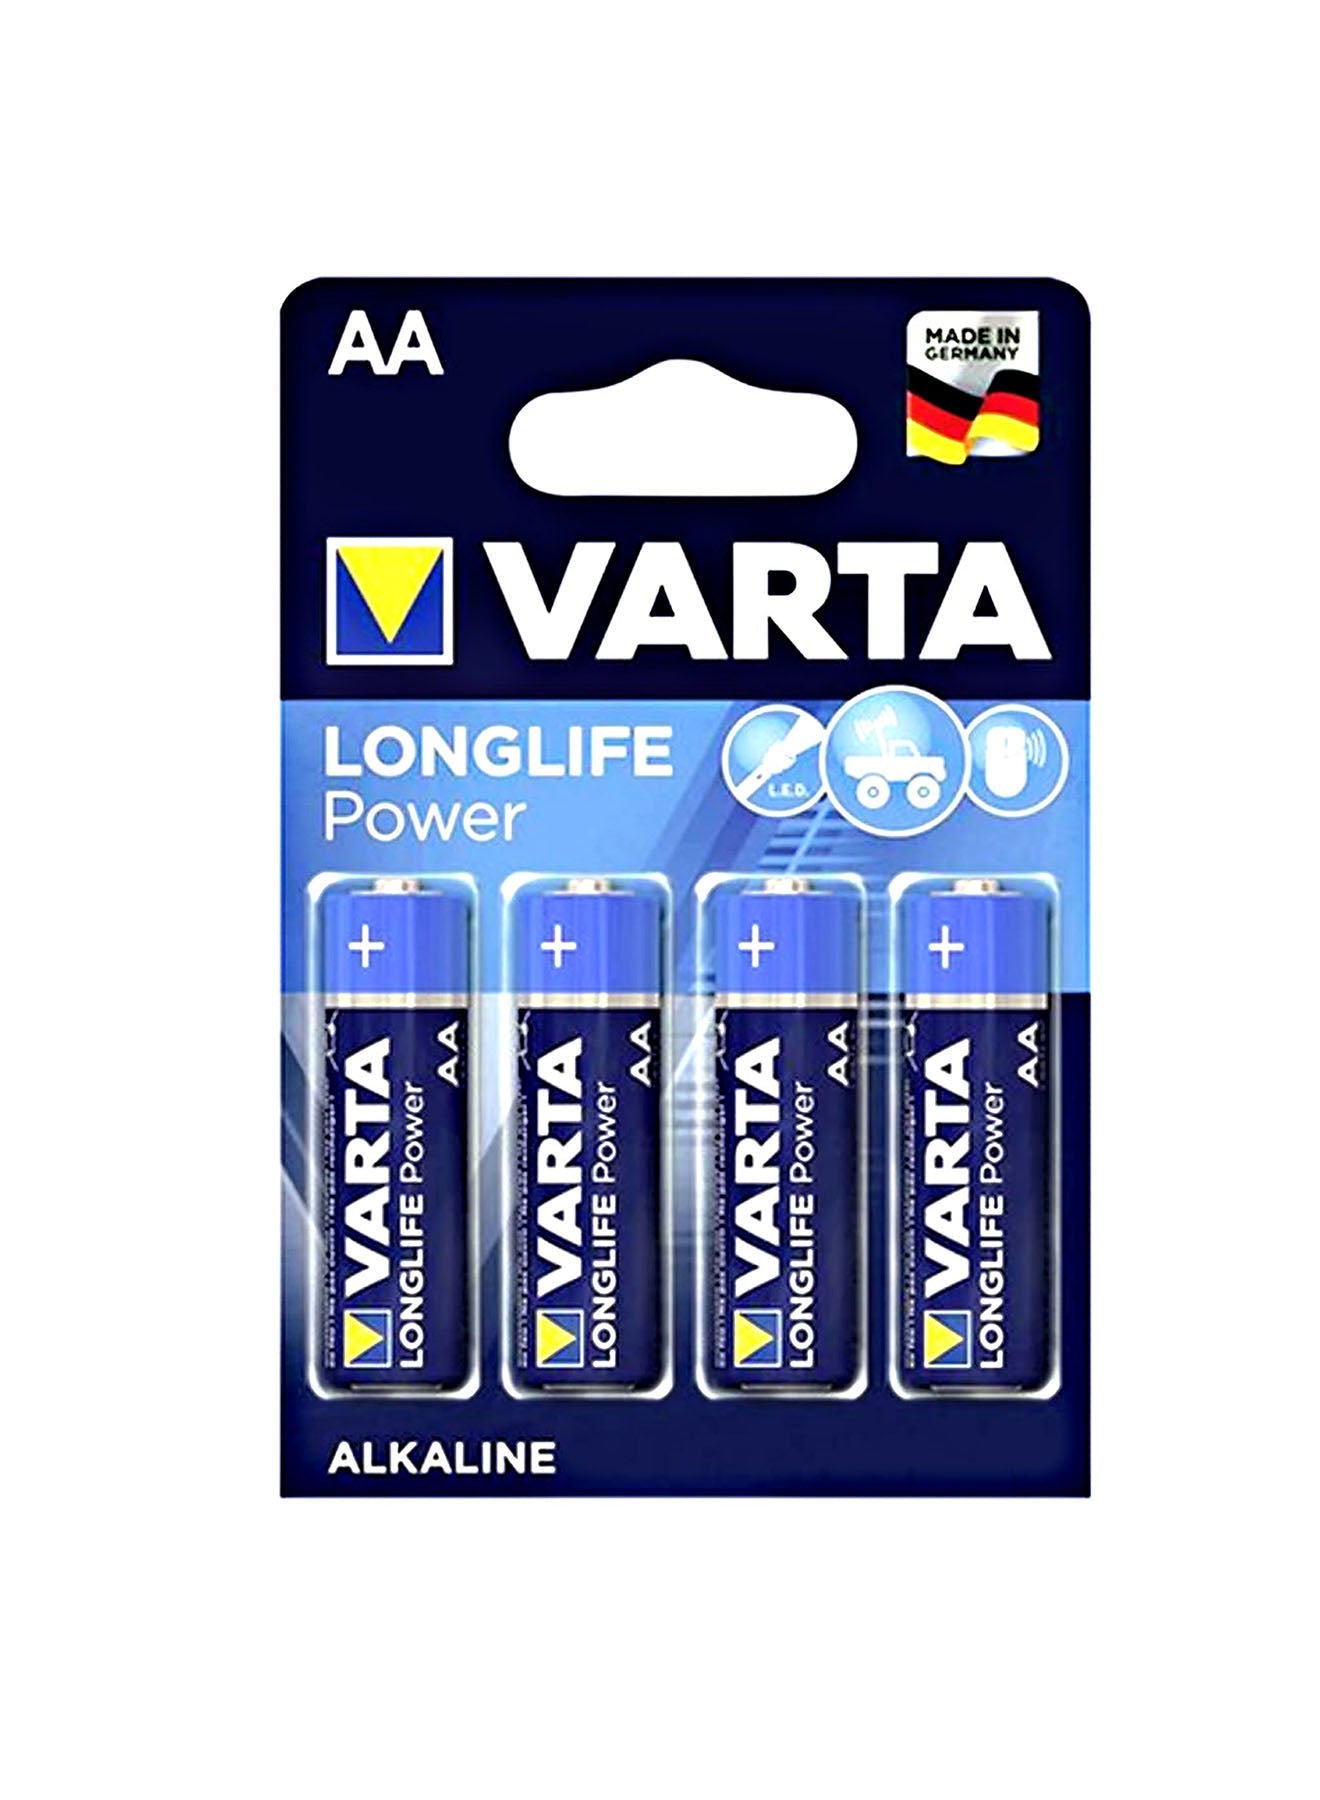 Varta Long Life Power Mignon AA Batteries 4 Units Value Pack of 3 